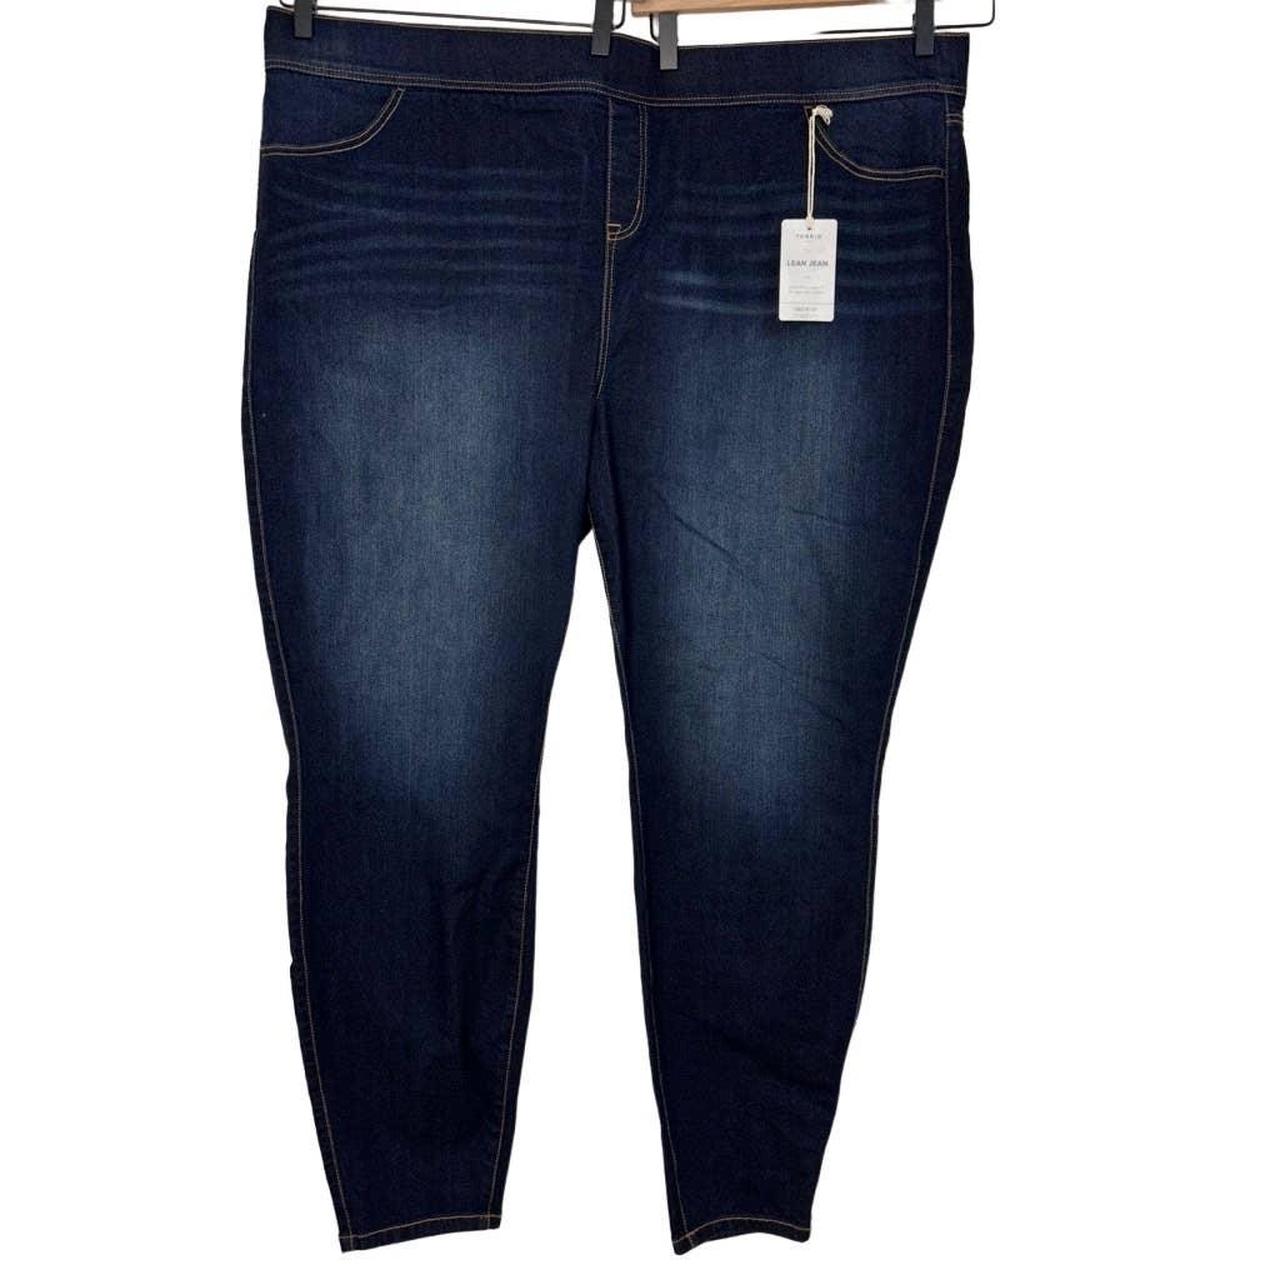 Lean Jean Straight Super Soft High-Rise Jean Size 5X - Depop